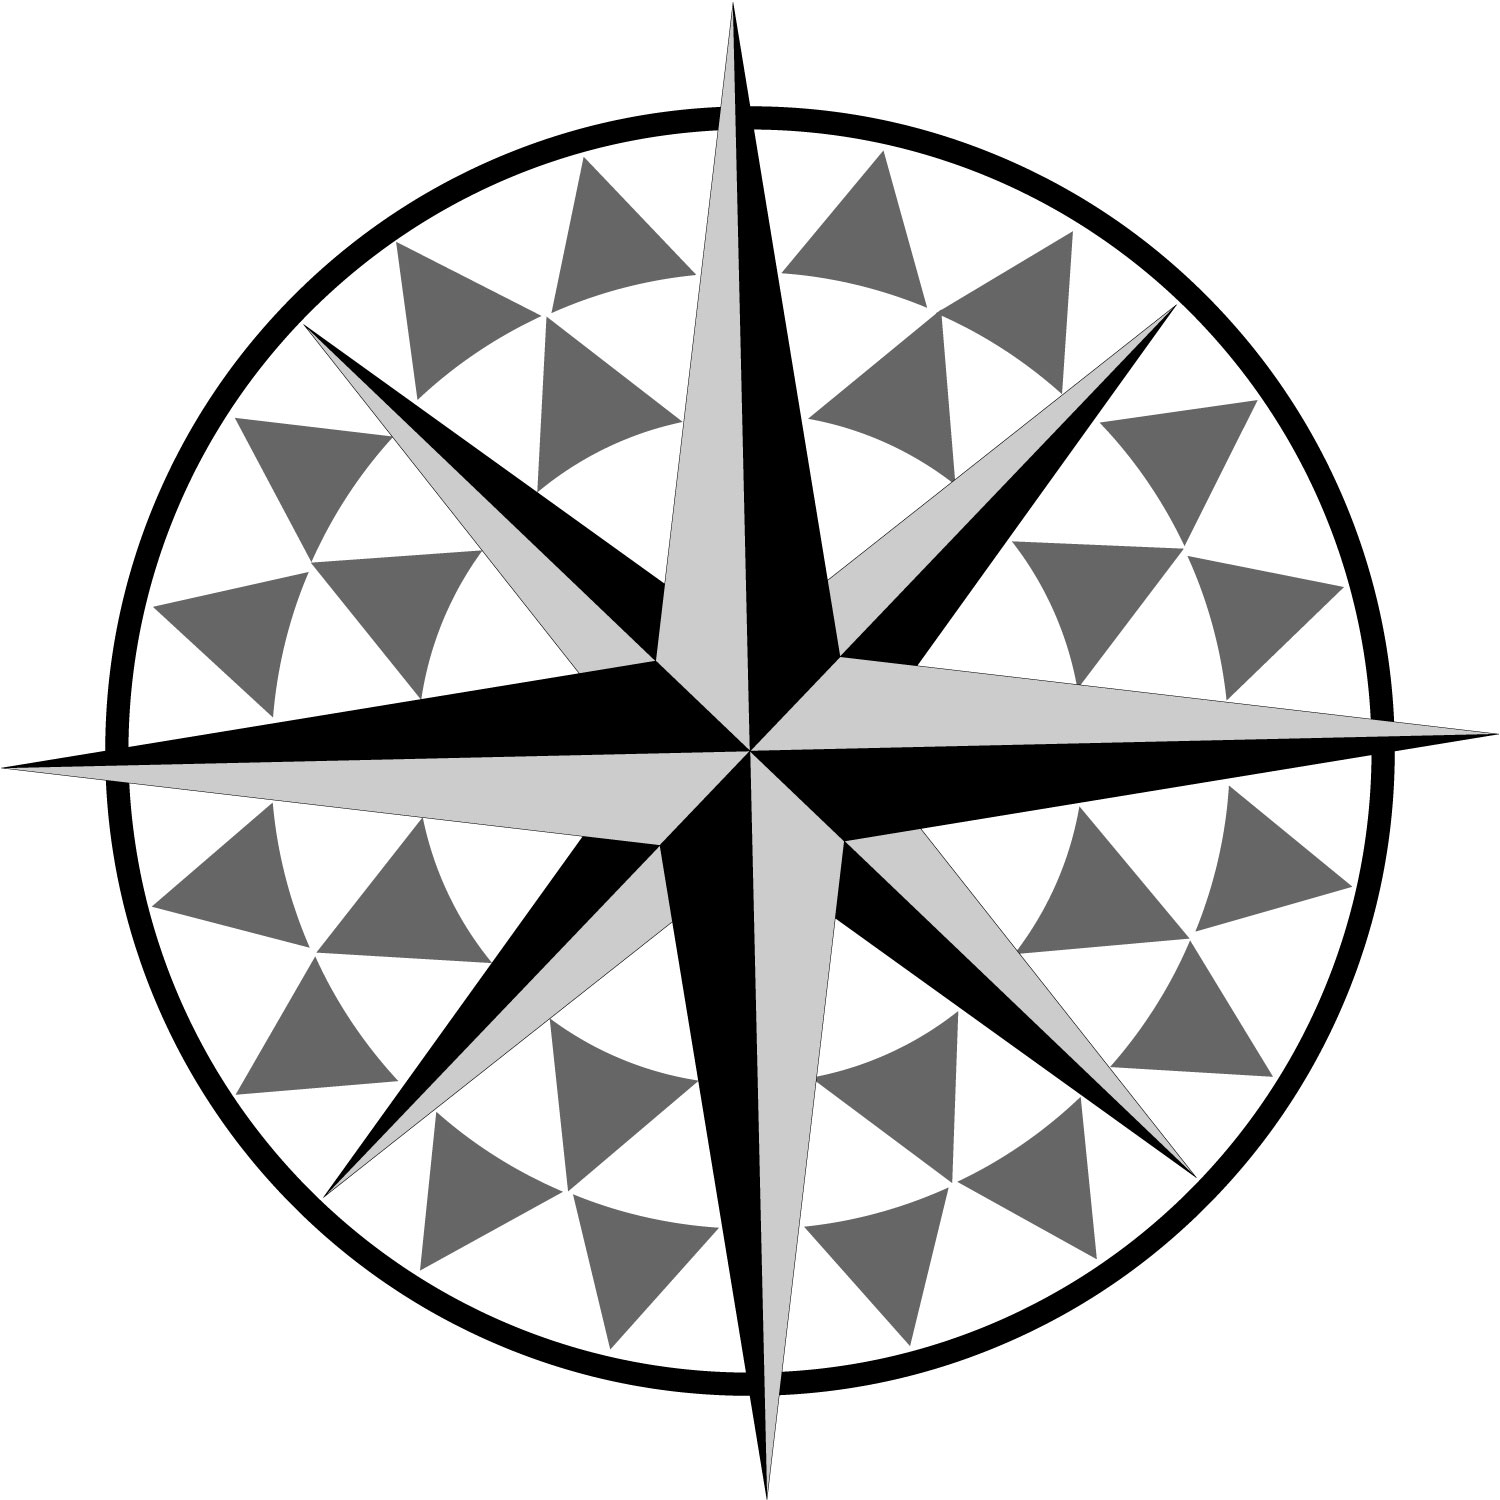 Pix For > Nautical Star Logo